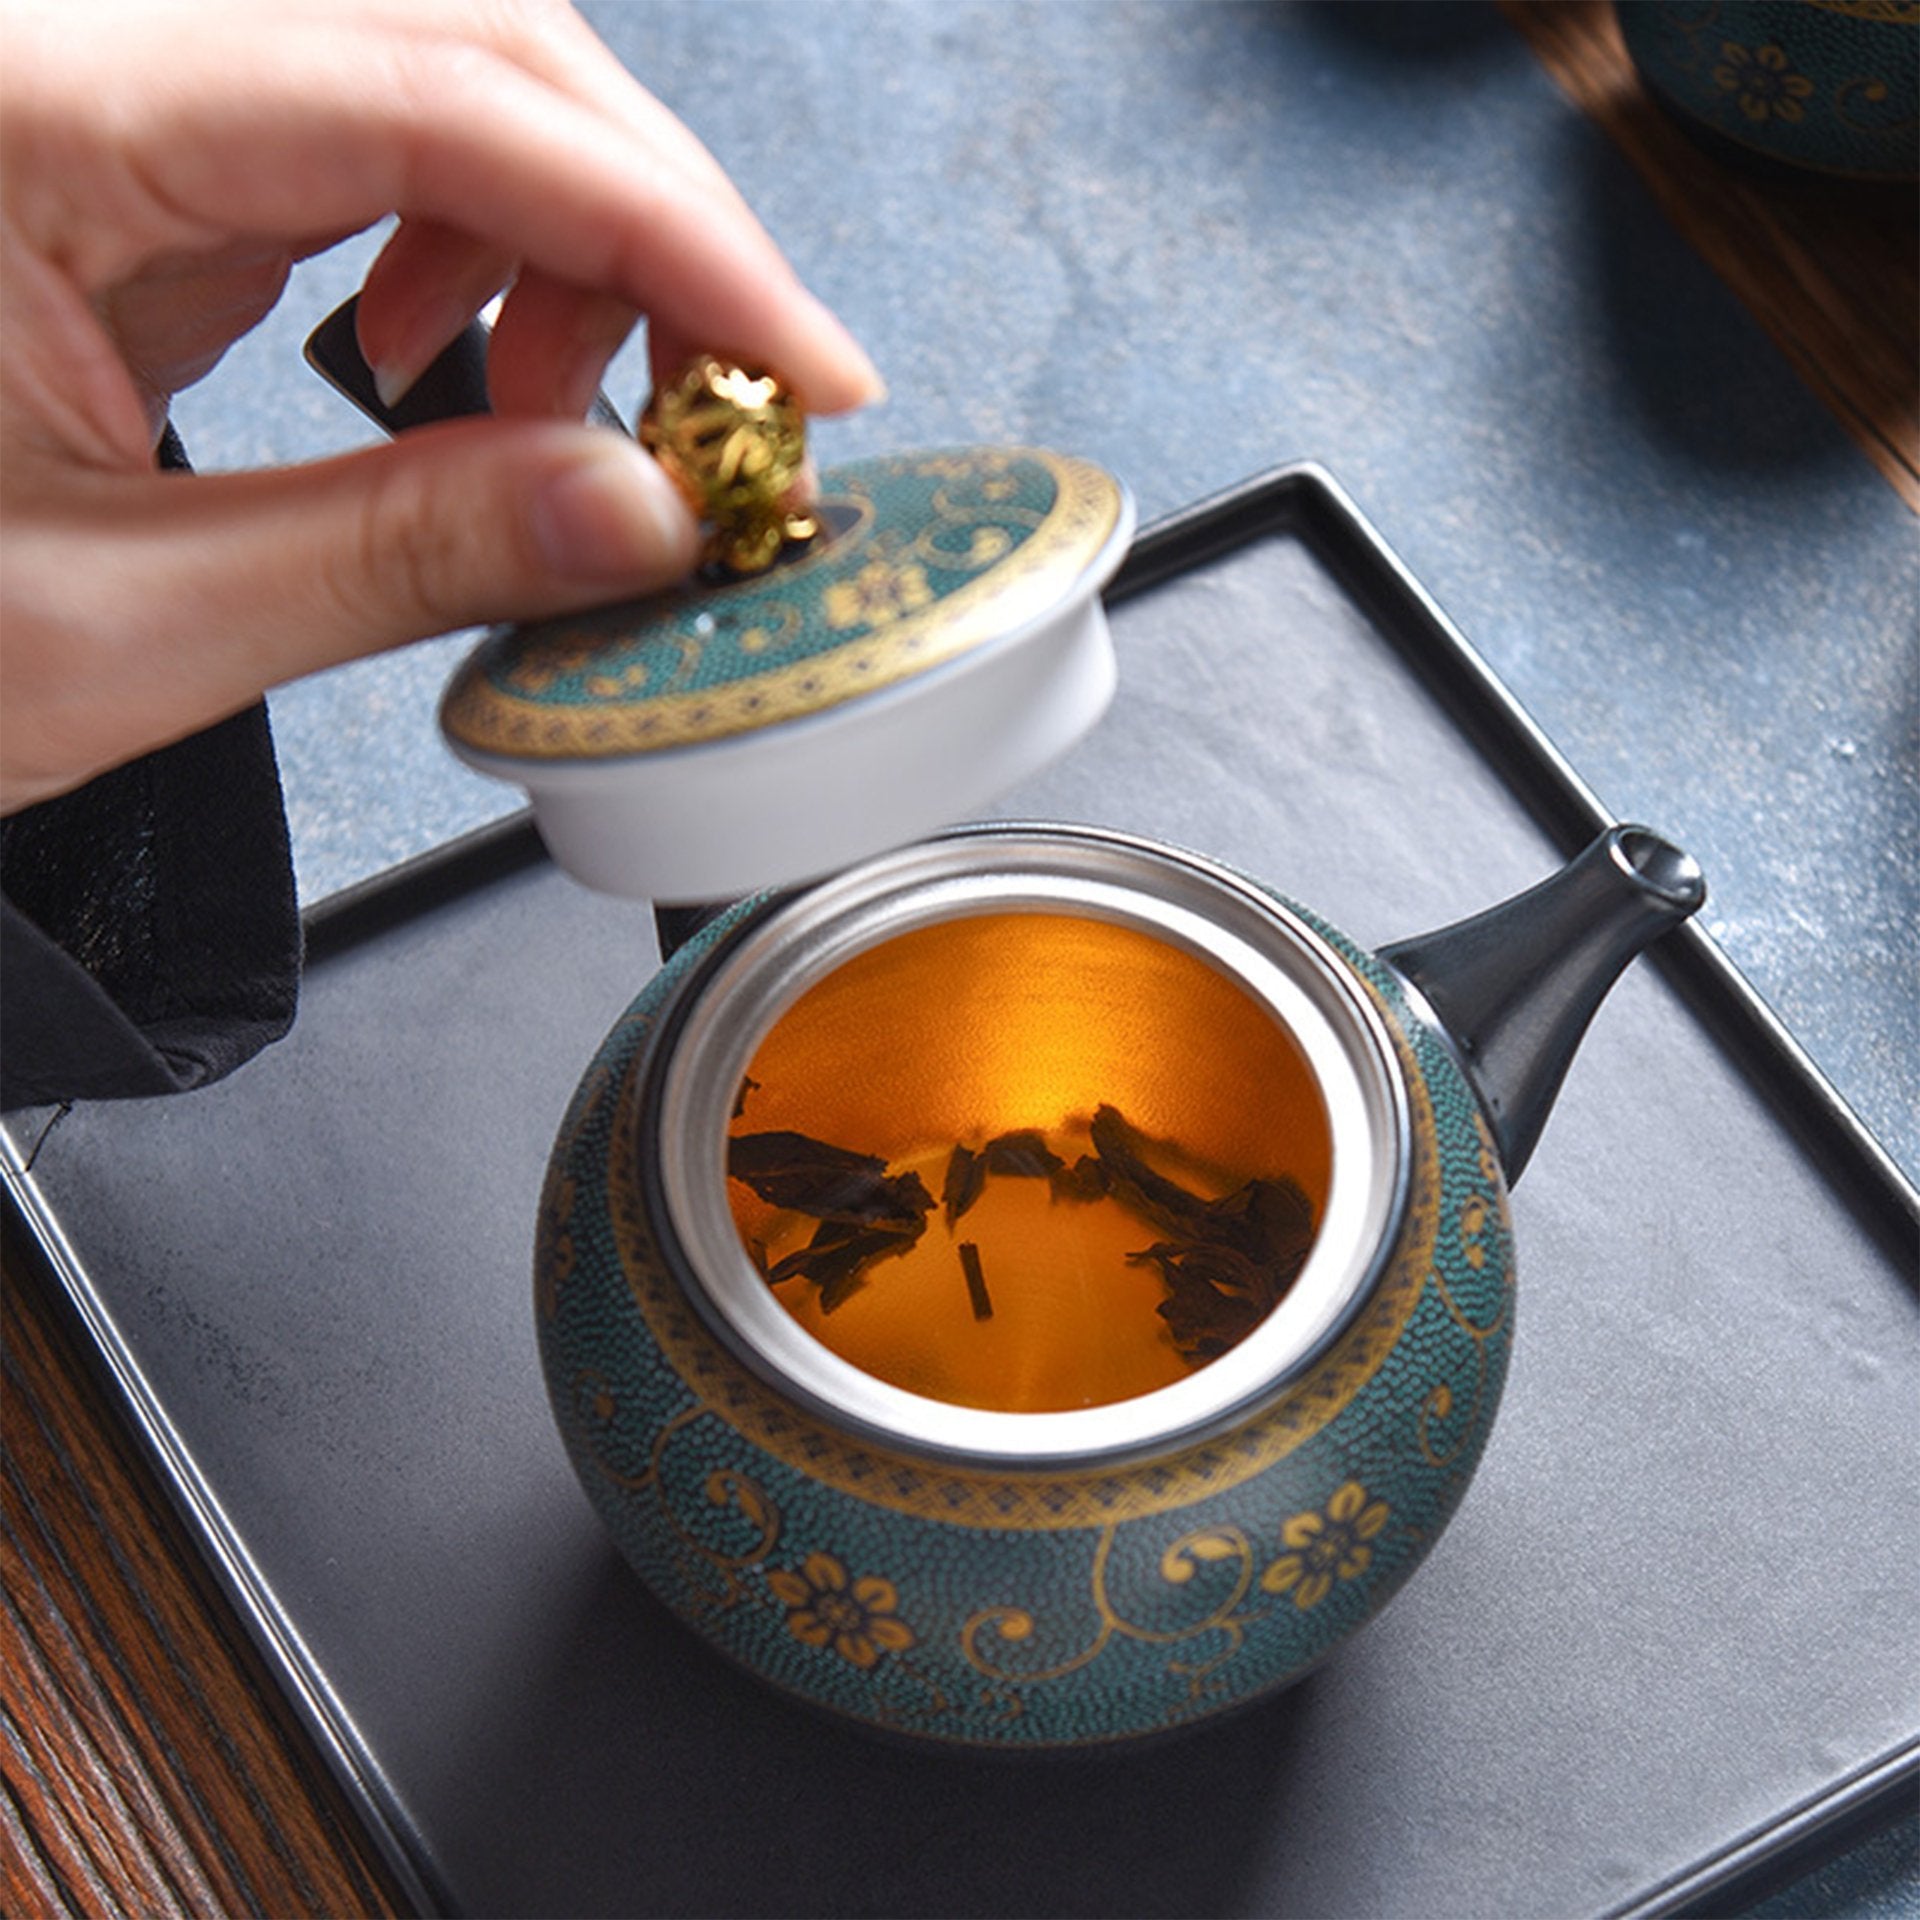 Open Yokade kyusu revealing tea leaves steeping inside